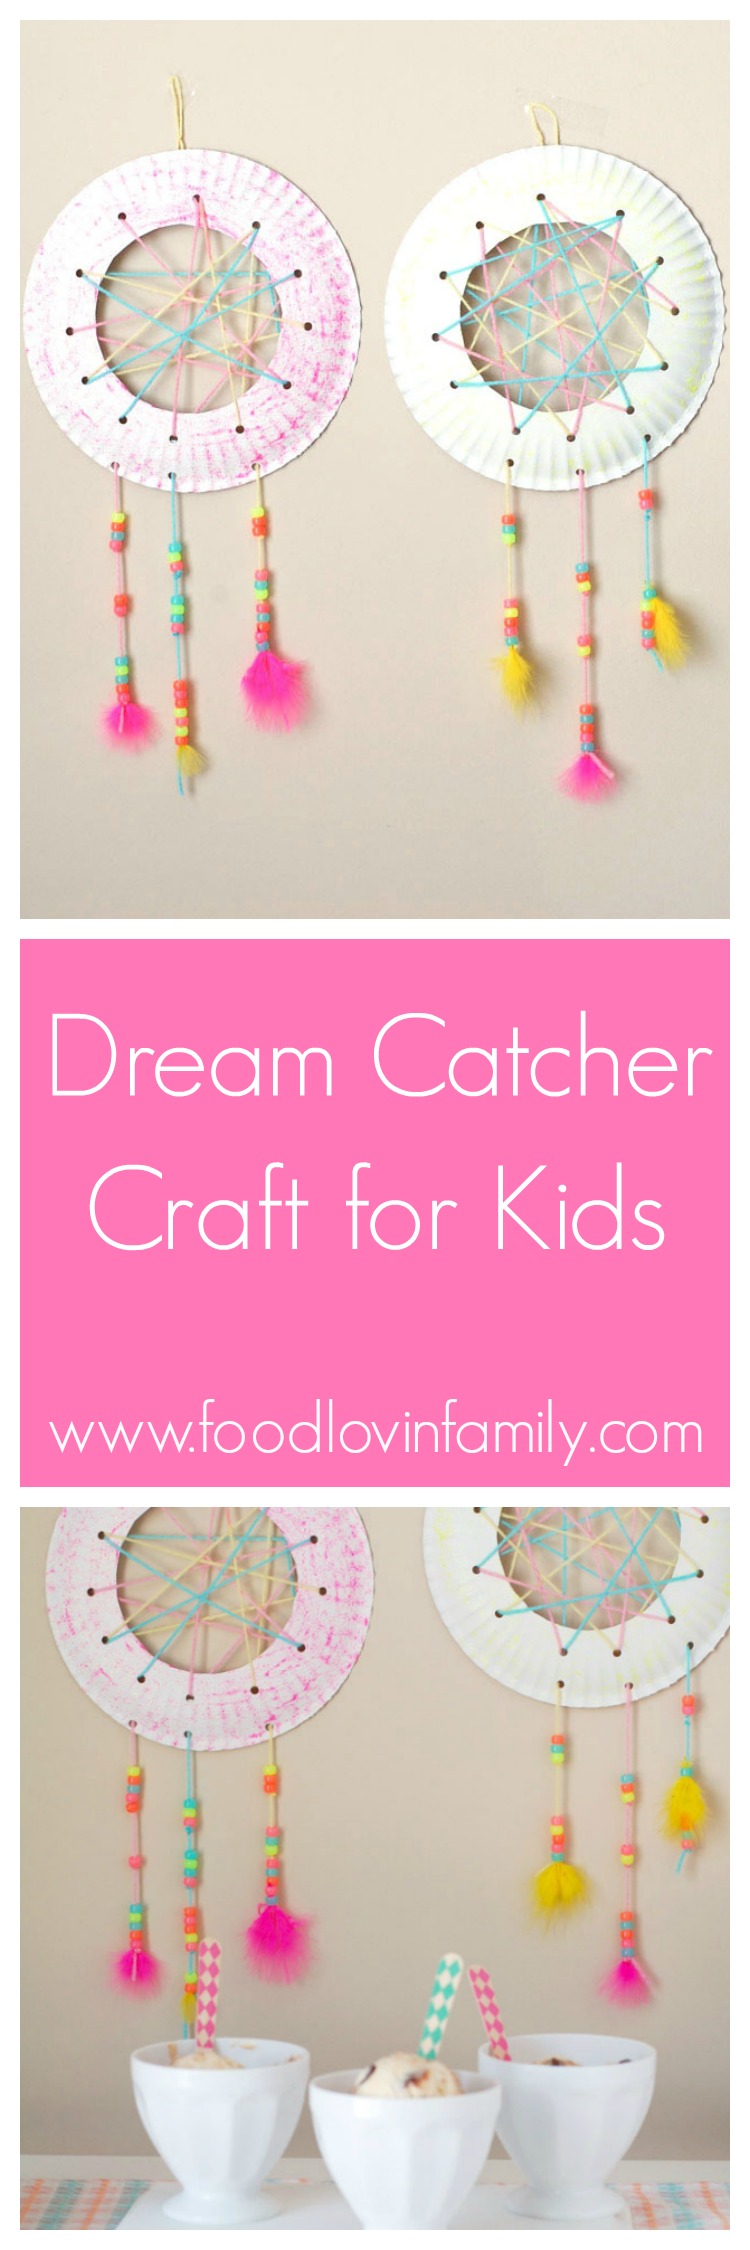 Dream Catcher Craft for Kids - Food Lovin Family